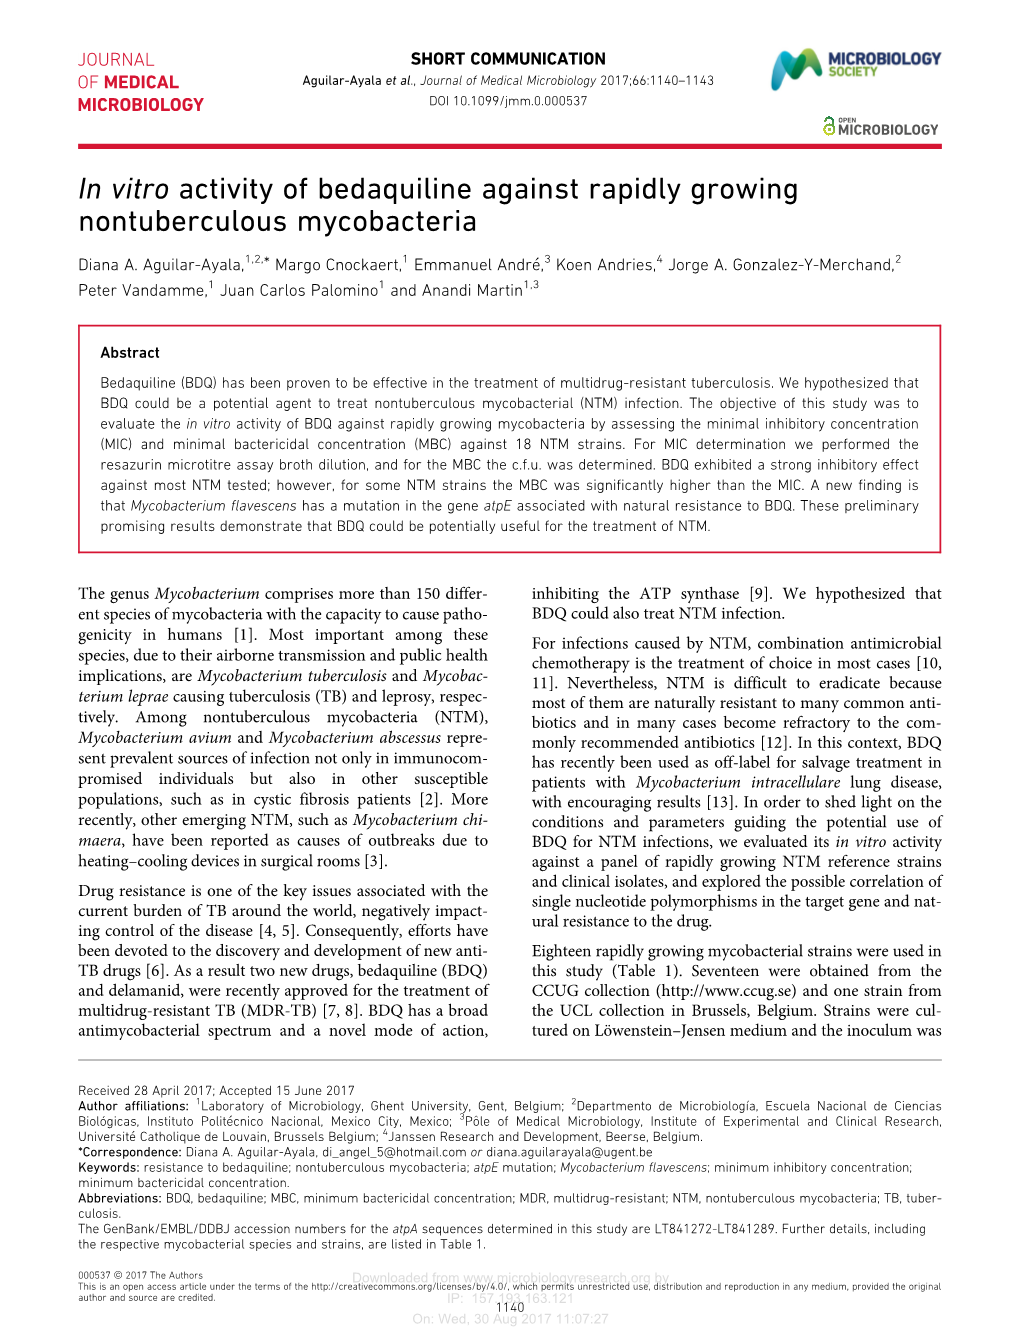 In Vitro Activity of Bedaquiline Against Rapidly Growing Nontuberculous Mycobacteria